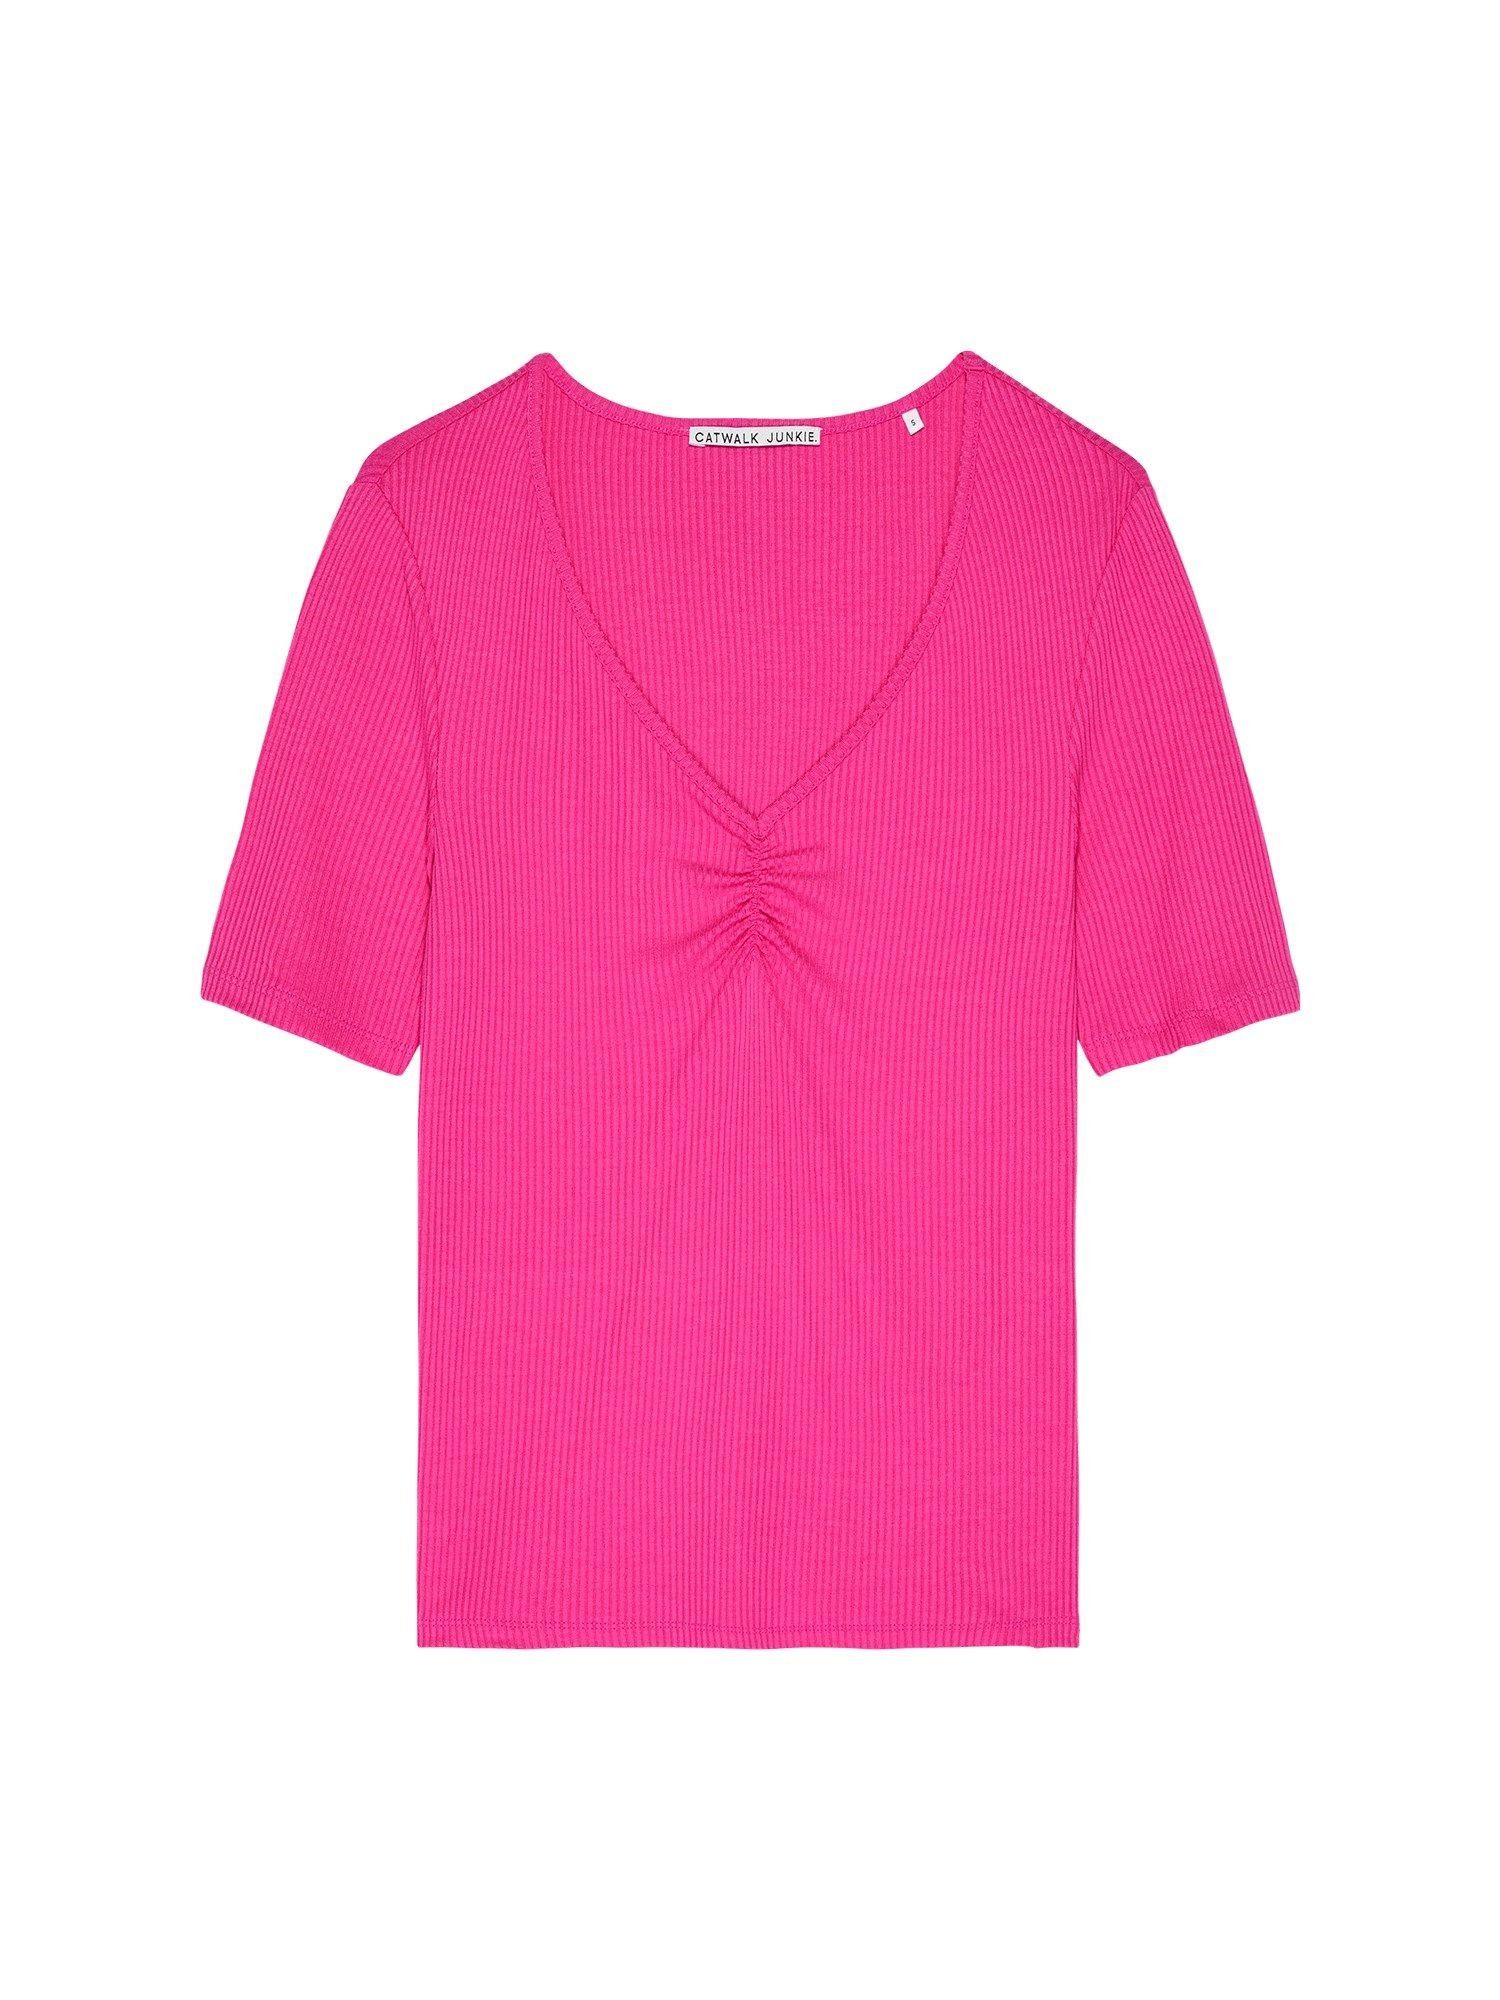 Catwalk Junkie T-Shirt 868 - pink yarrow